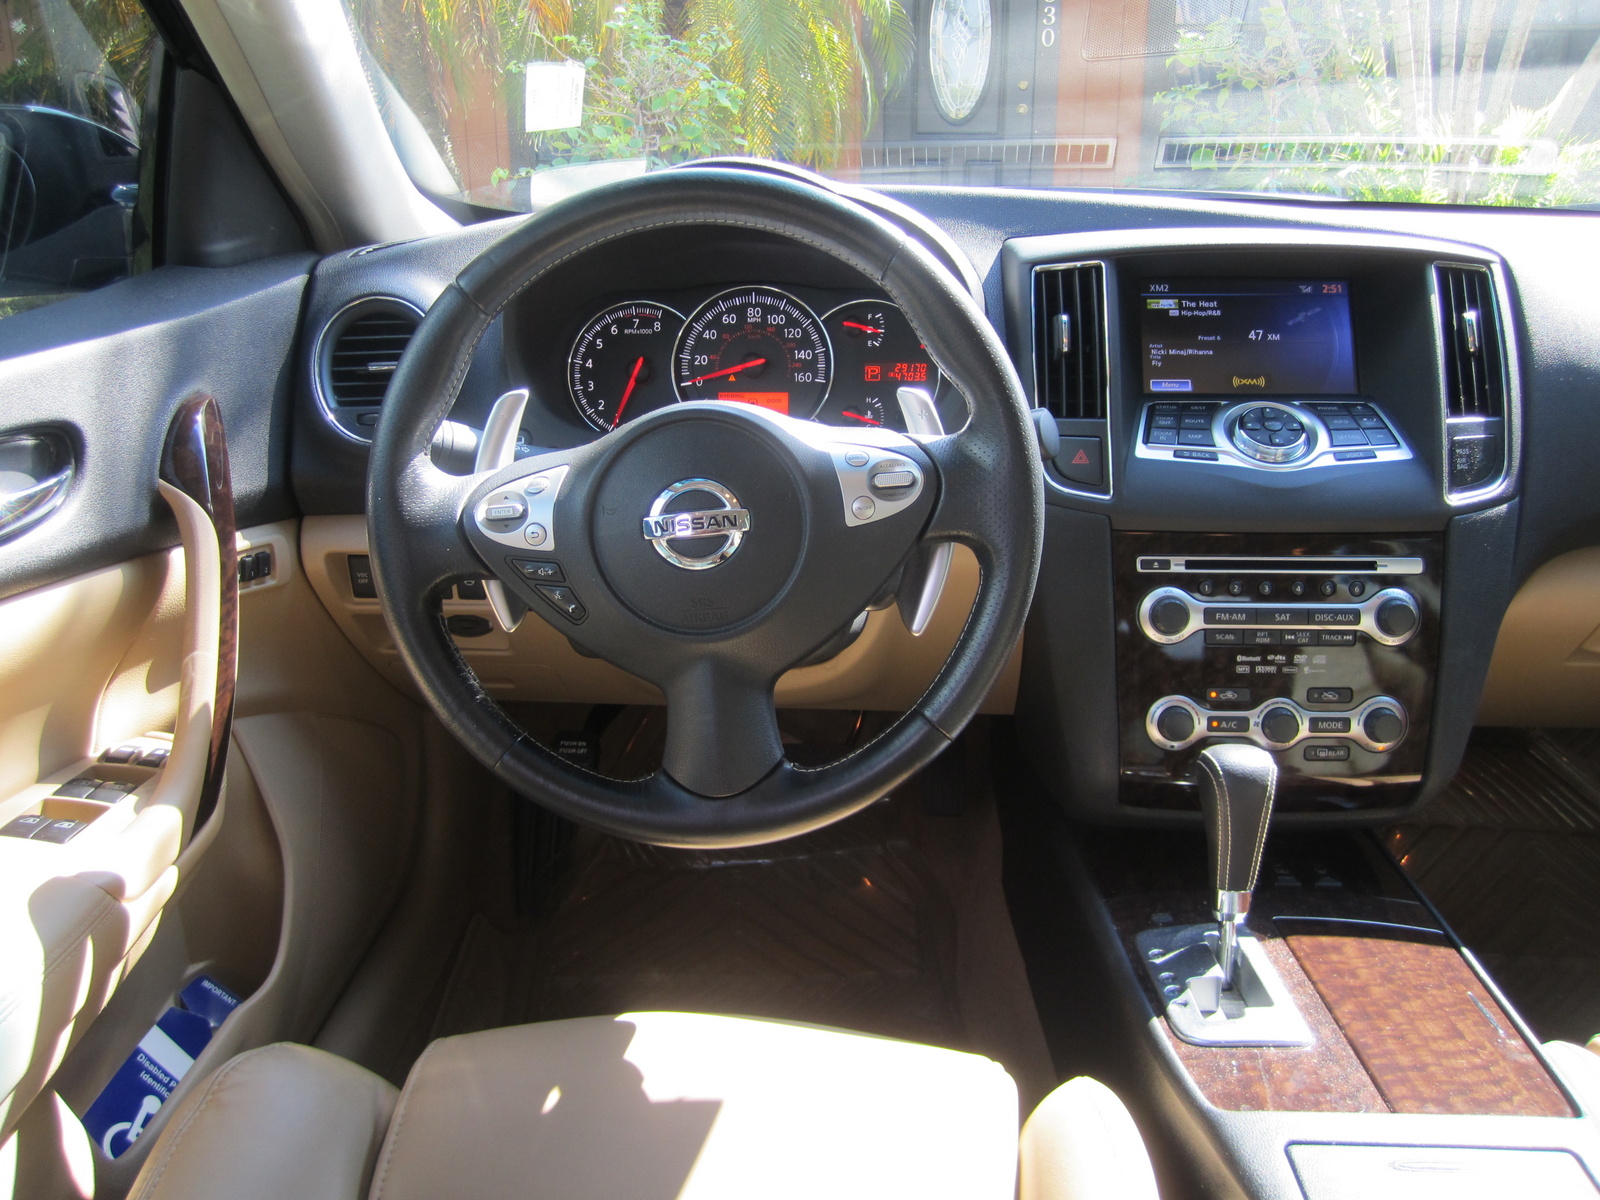 2010 Nissan maxima interior dimensions #7